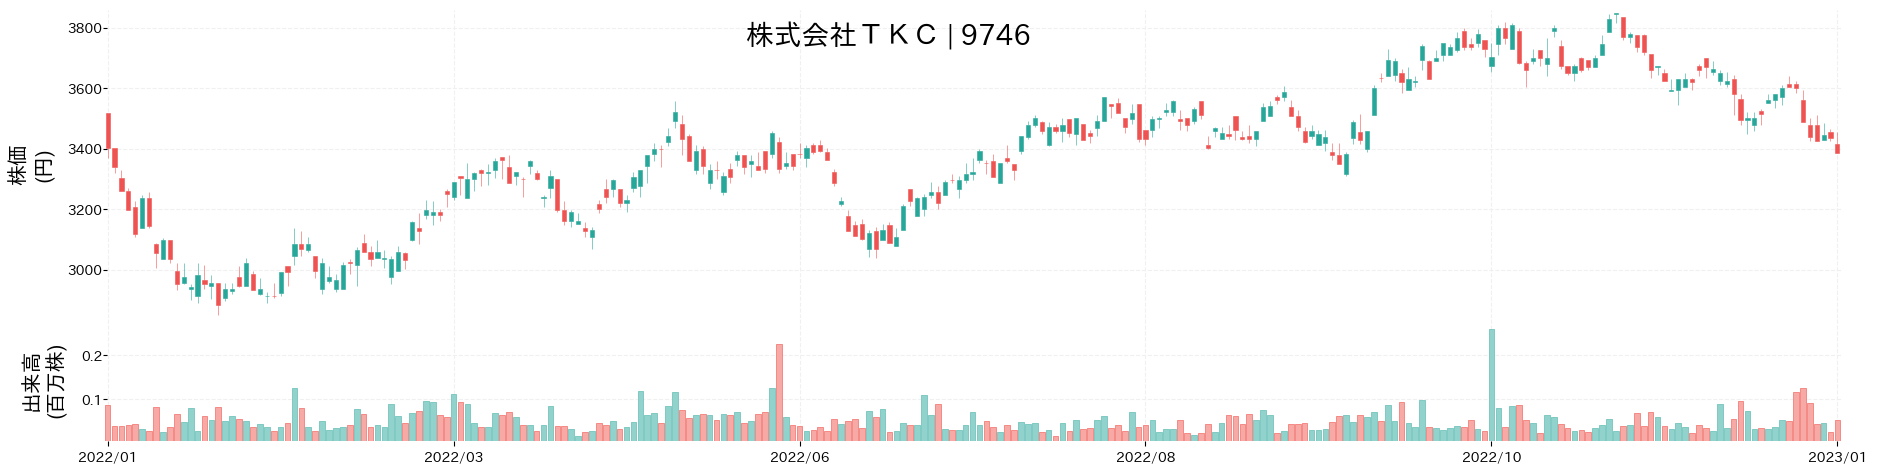 TKCの株価推移(2022)